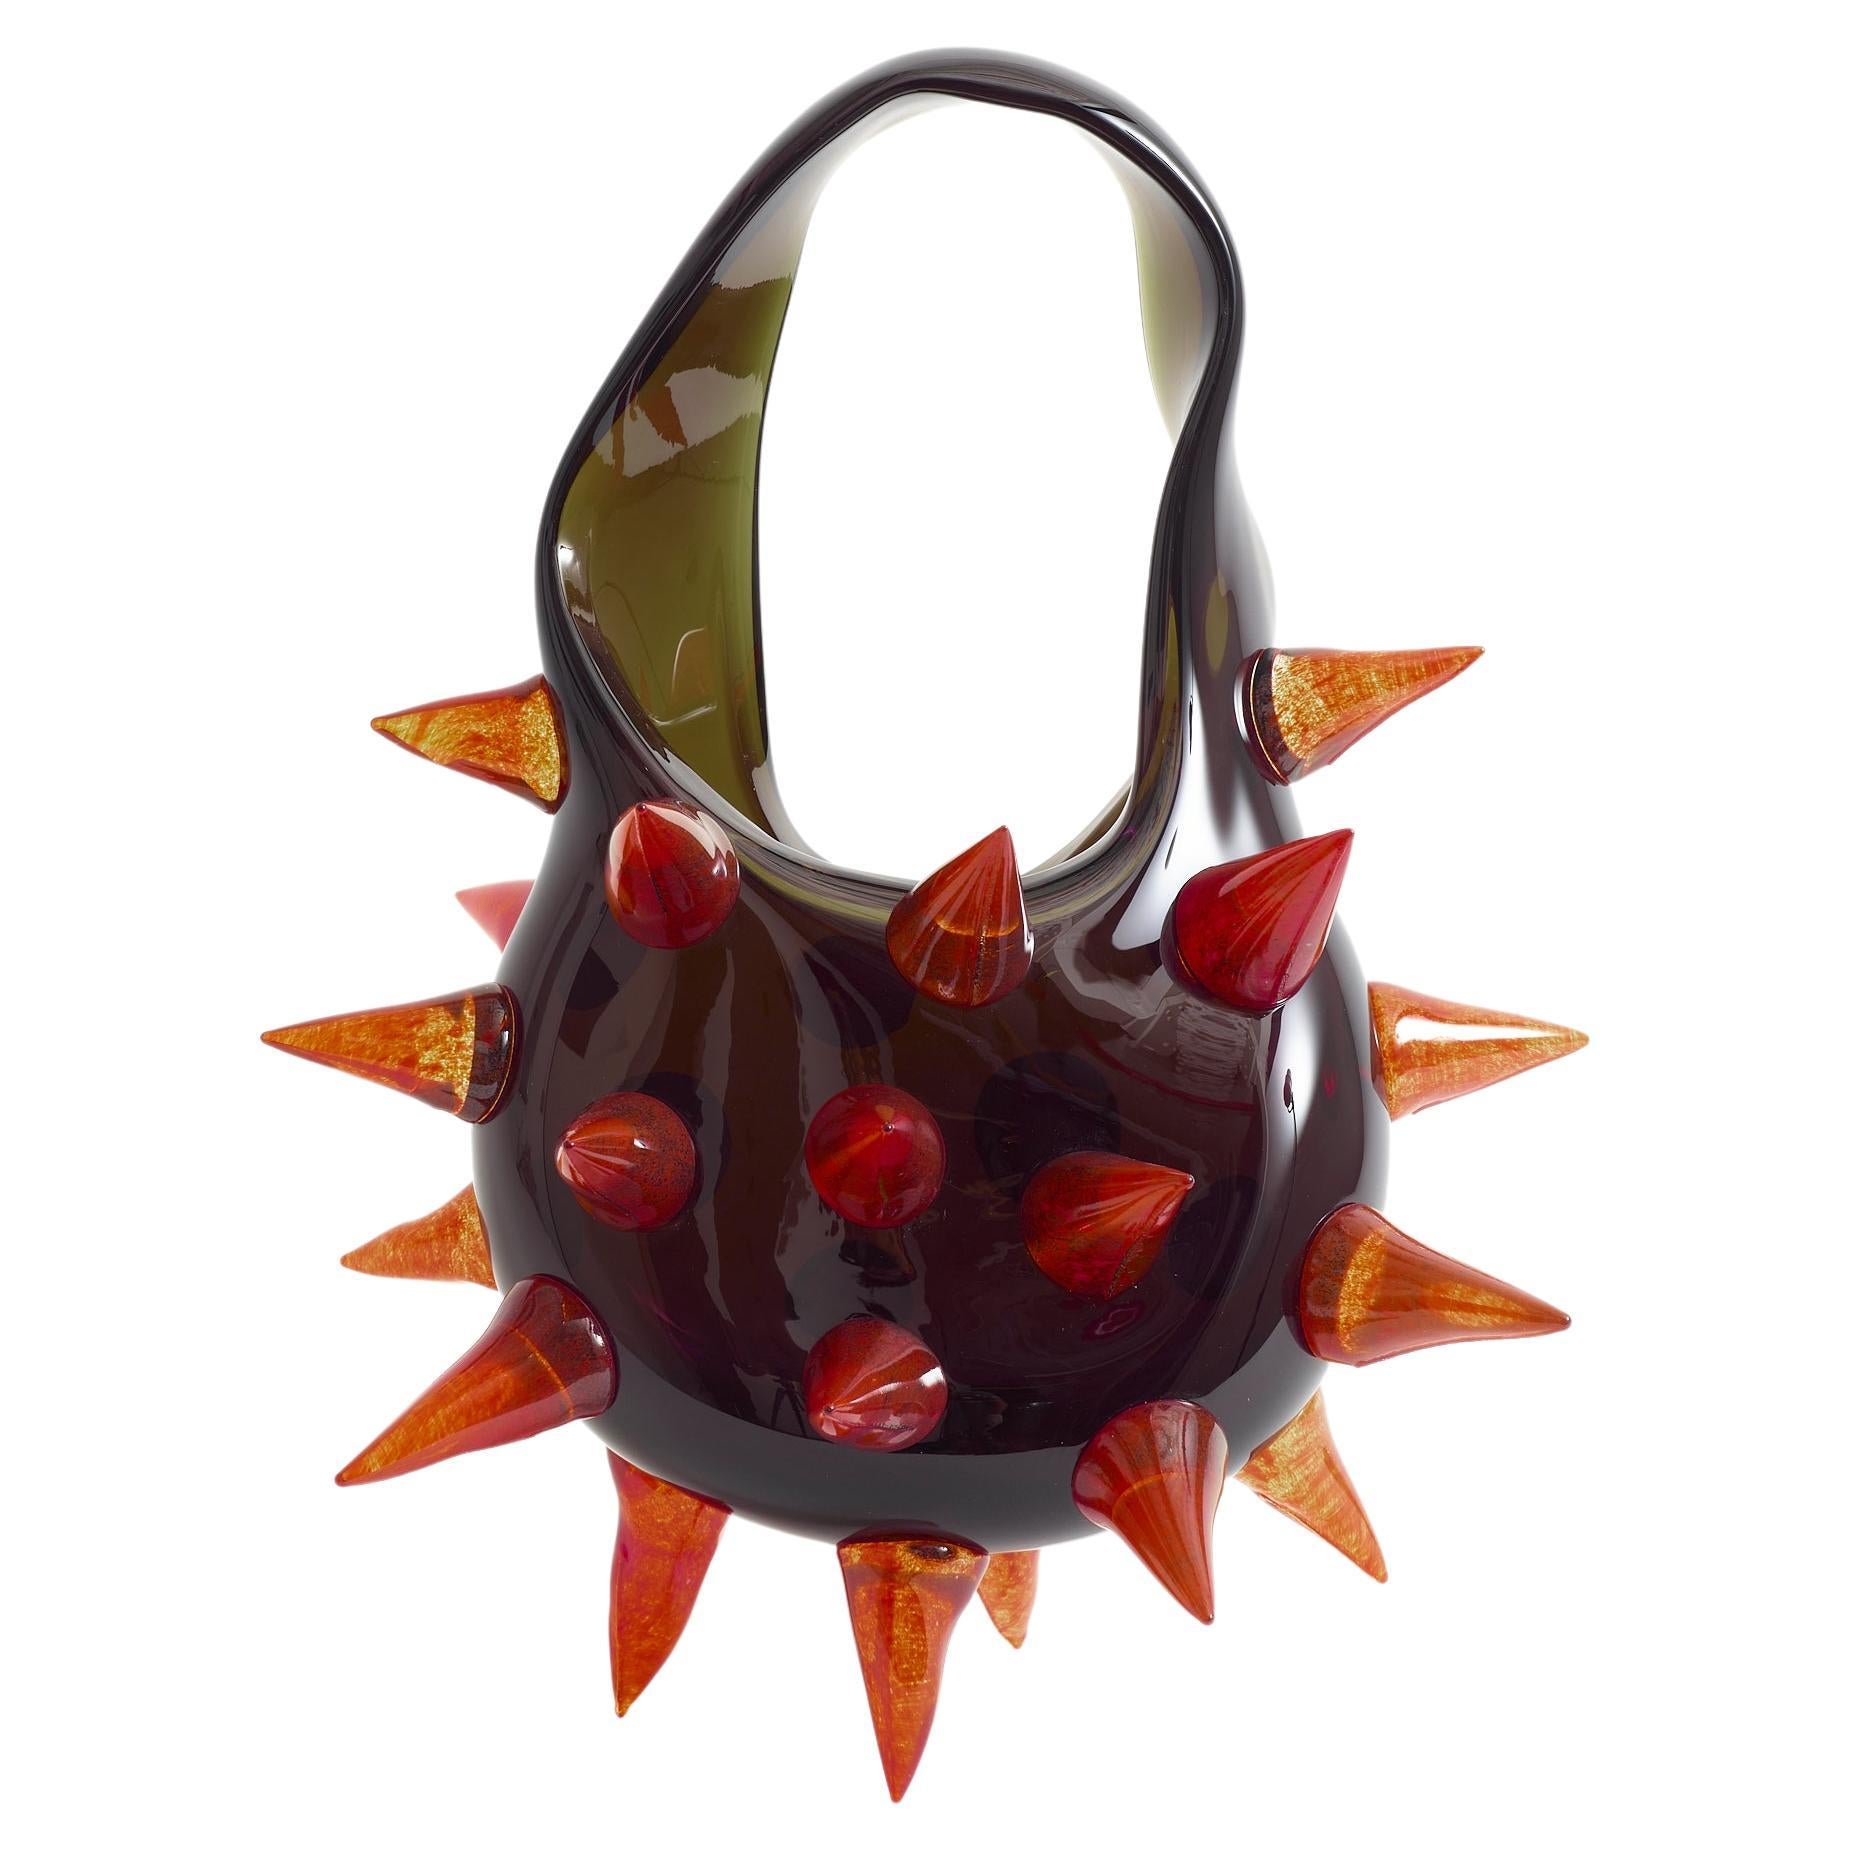 Glass Handbag with Red Spikes by Raiffe